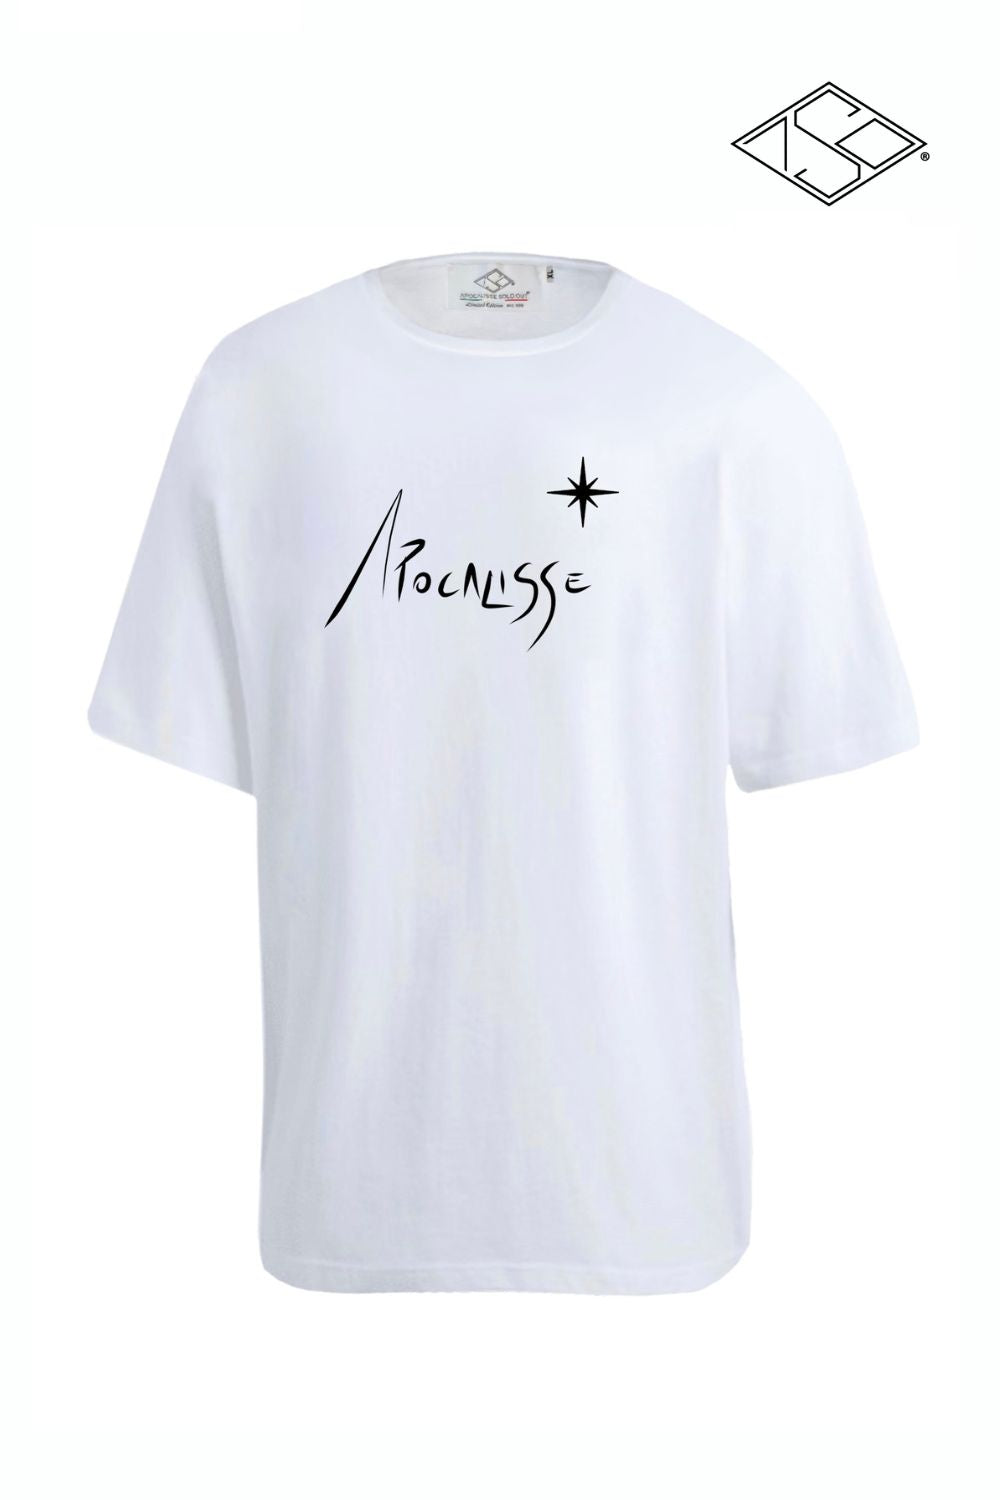 Apocalisse TSHIRT UFO SU LUNA 1  by ApocalisseSoldOut® Fashion Brand